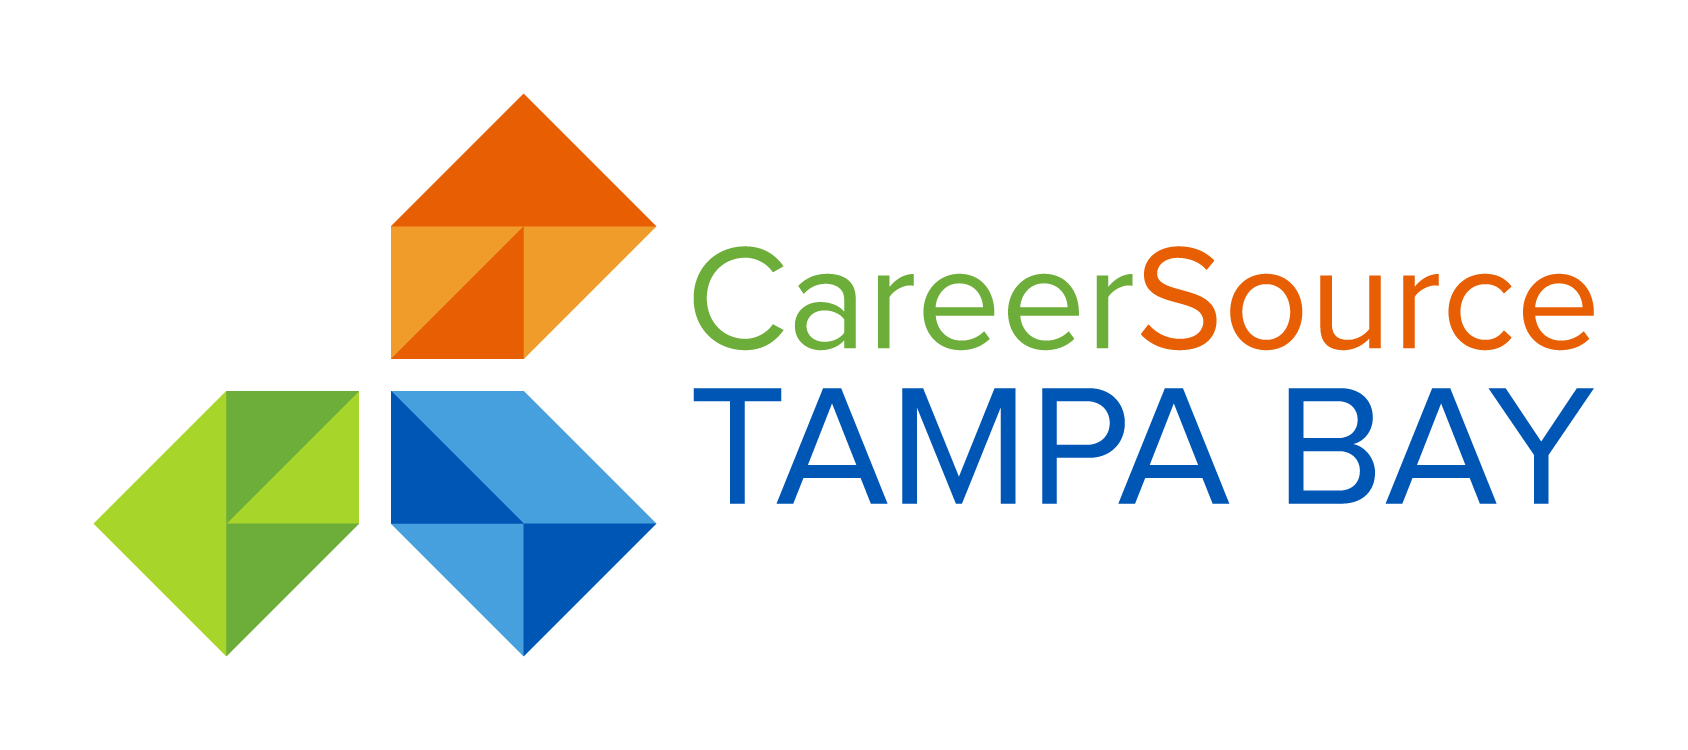 CareerSource Tampa Bay logo